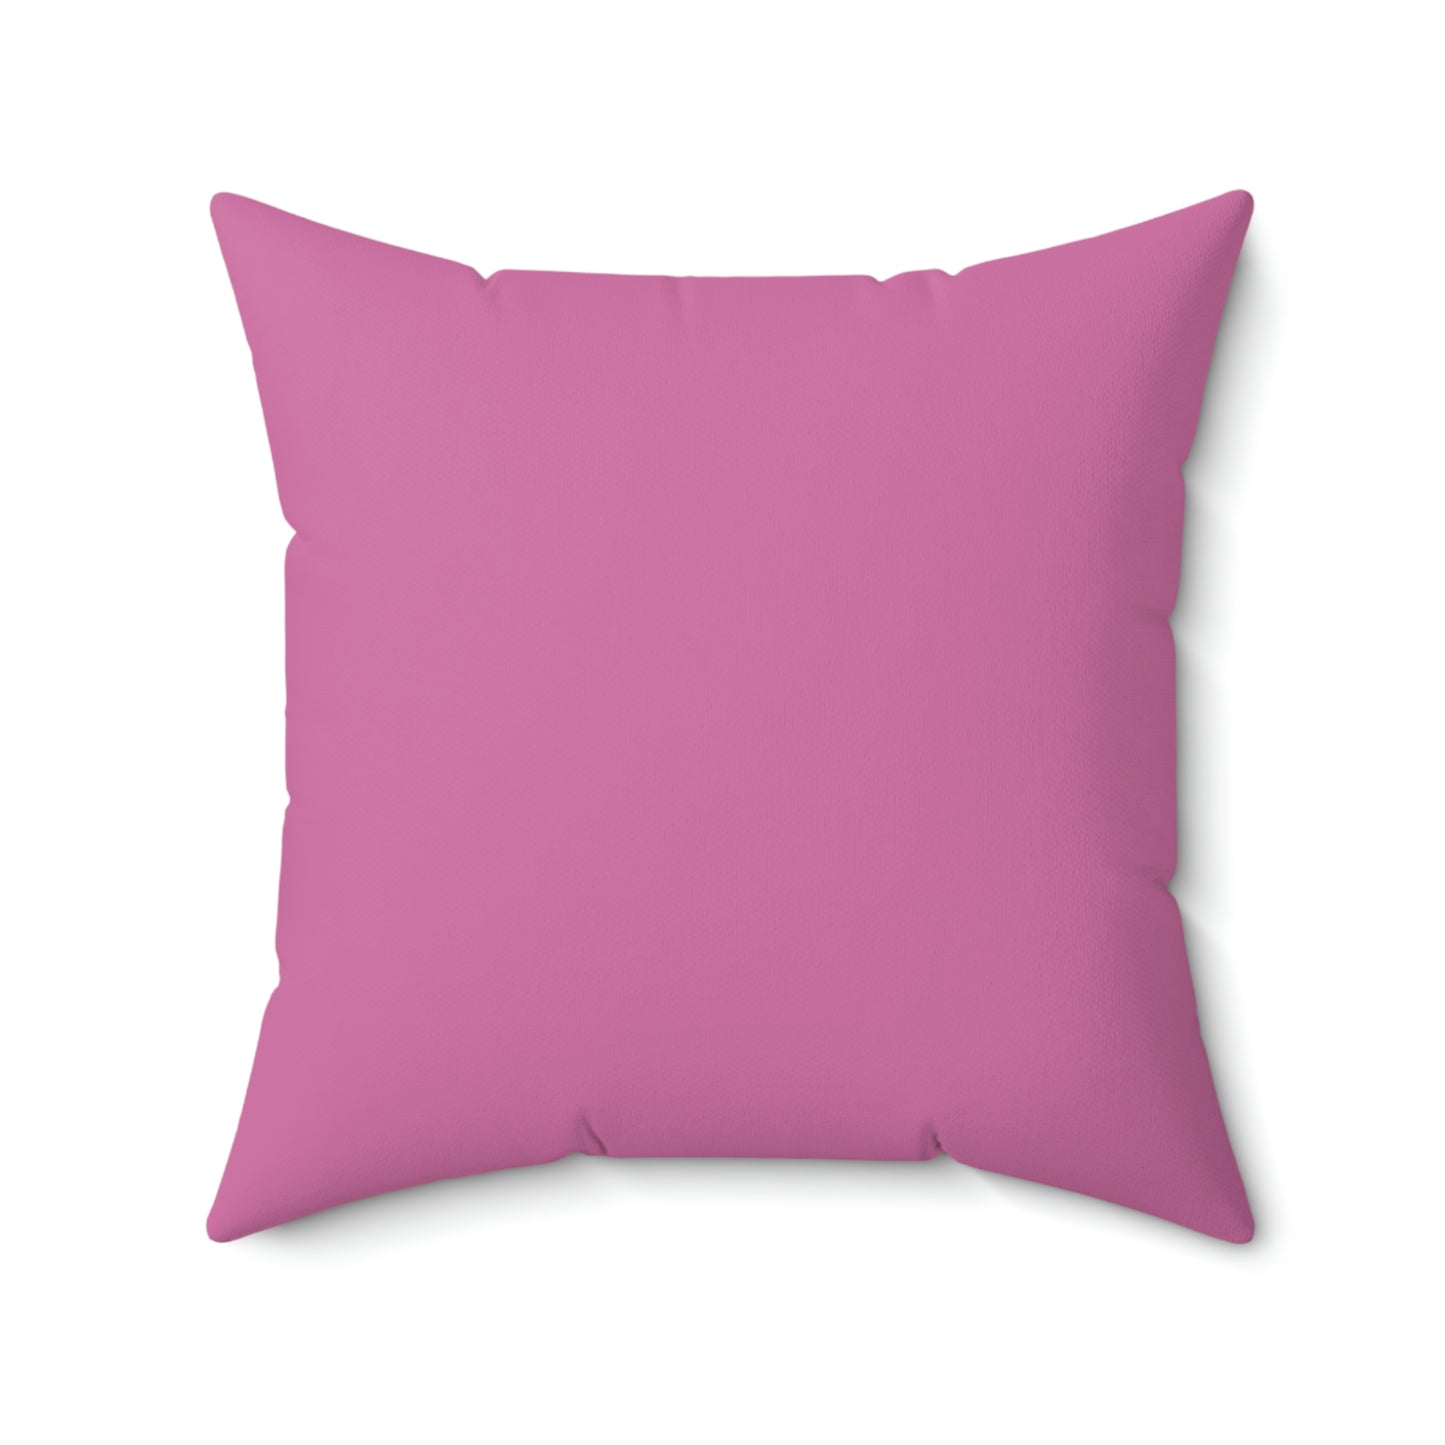 Spun Polyester Square Pillow Case “Kindergarten Rocks on Light Pink”